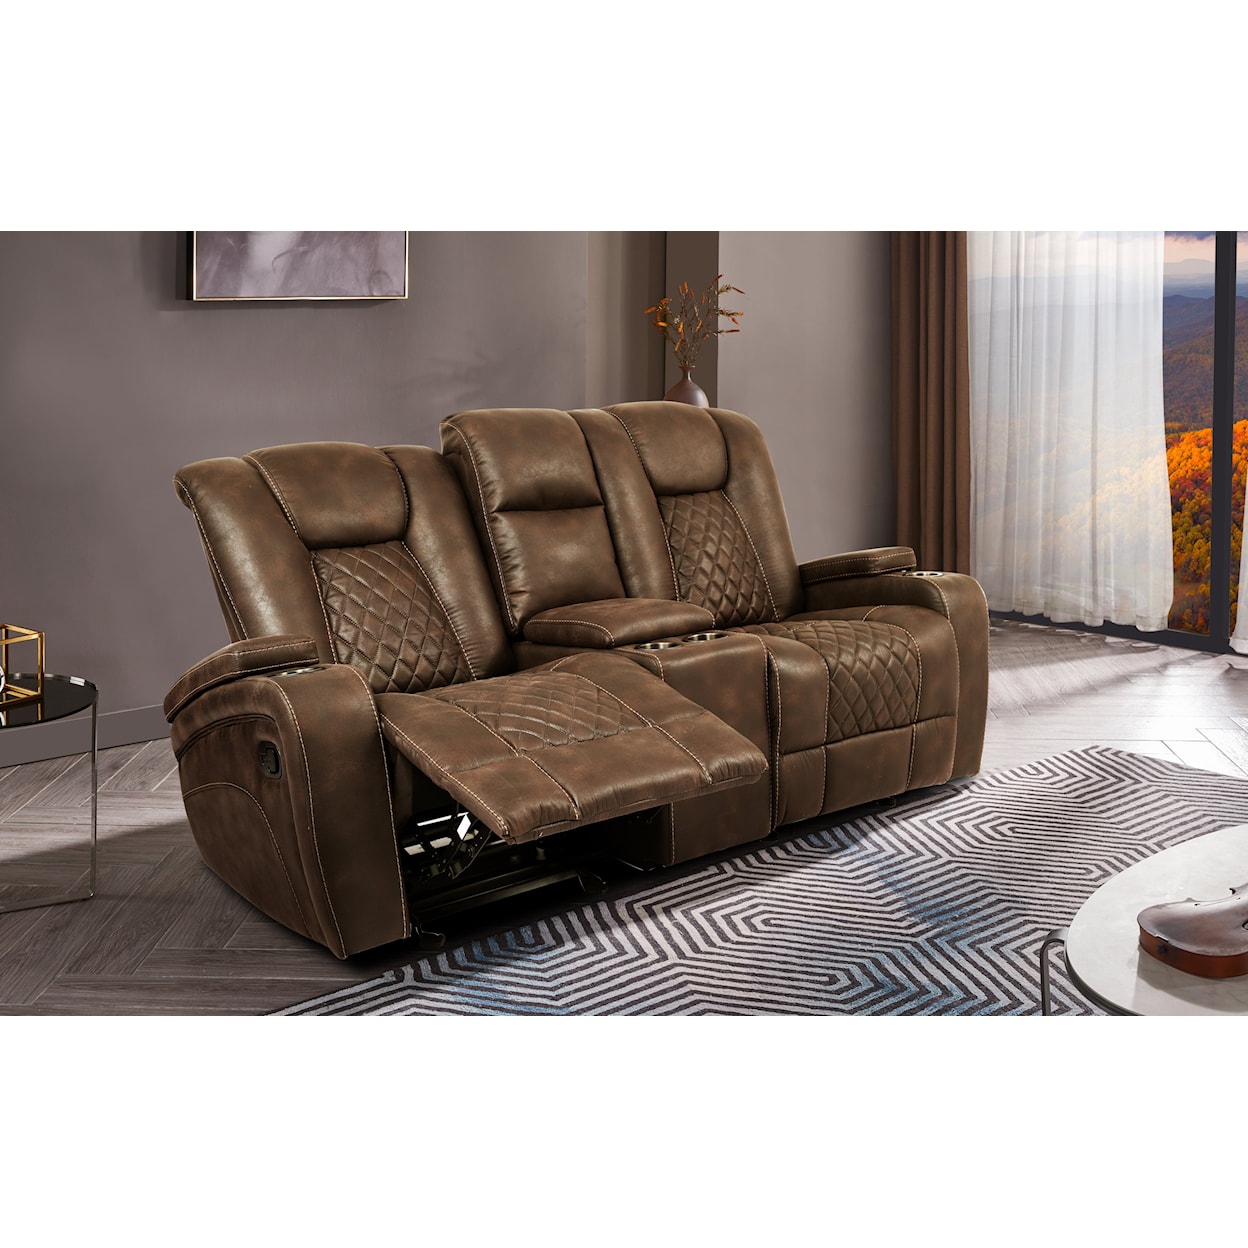 Cheers 70116 Manual Transformer 70116 Brown Dual Reclining sofa